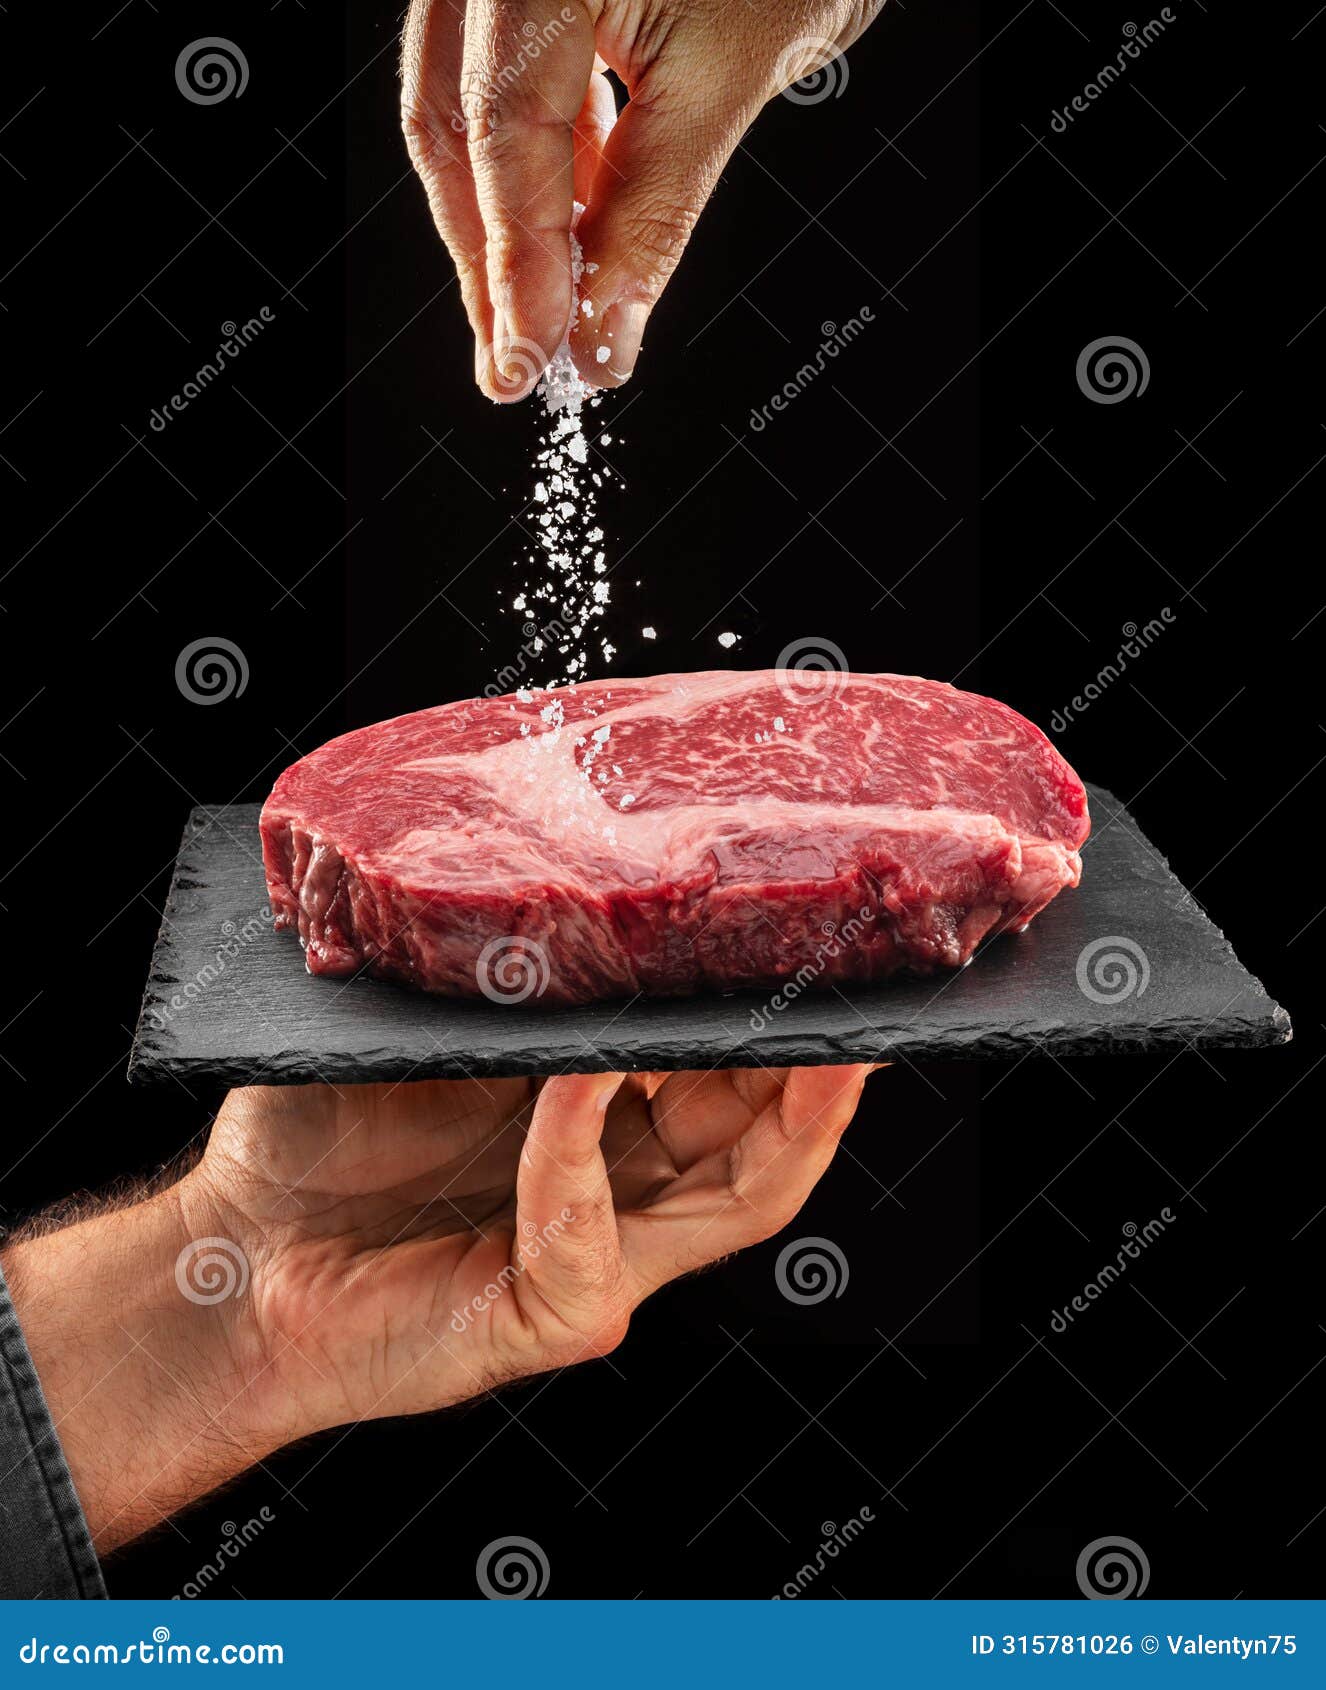 chef is salting or seasoning raw ribeye steak laying on graphite serving board. black background